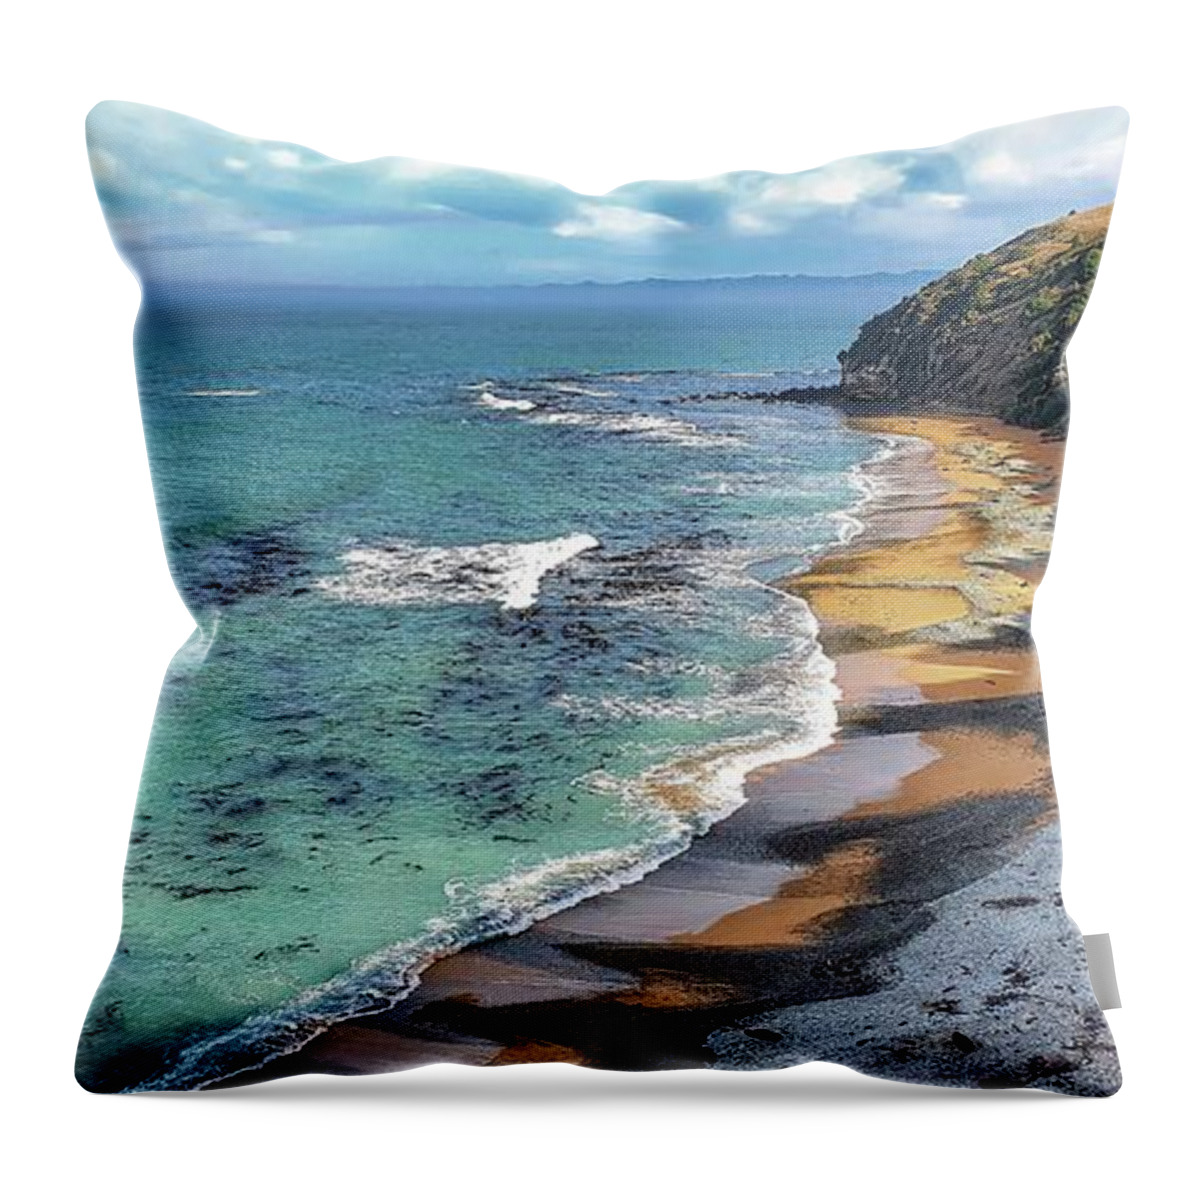 Bushy Beach Throw Pillow featuring the photograph Bushy Beach - Oamaru, New Zealand by Bernard Spragg